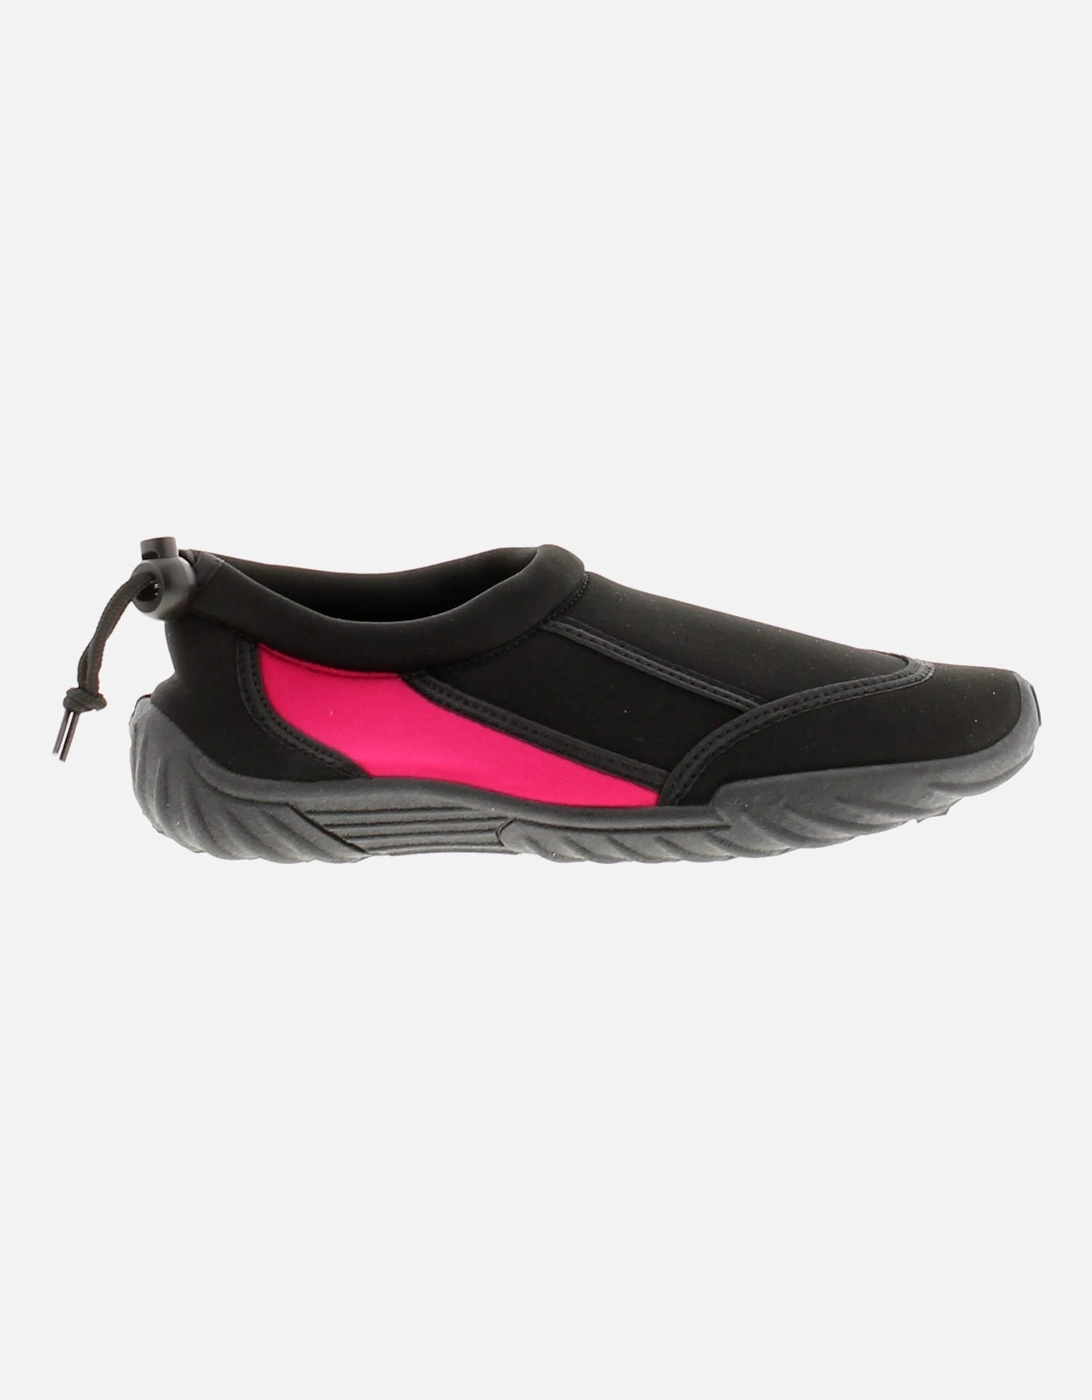 Womens Aqua Shoes Rockpool Slip On black pink UK Size